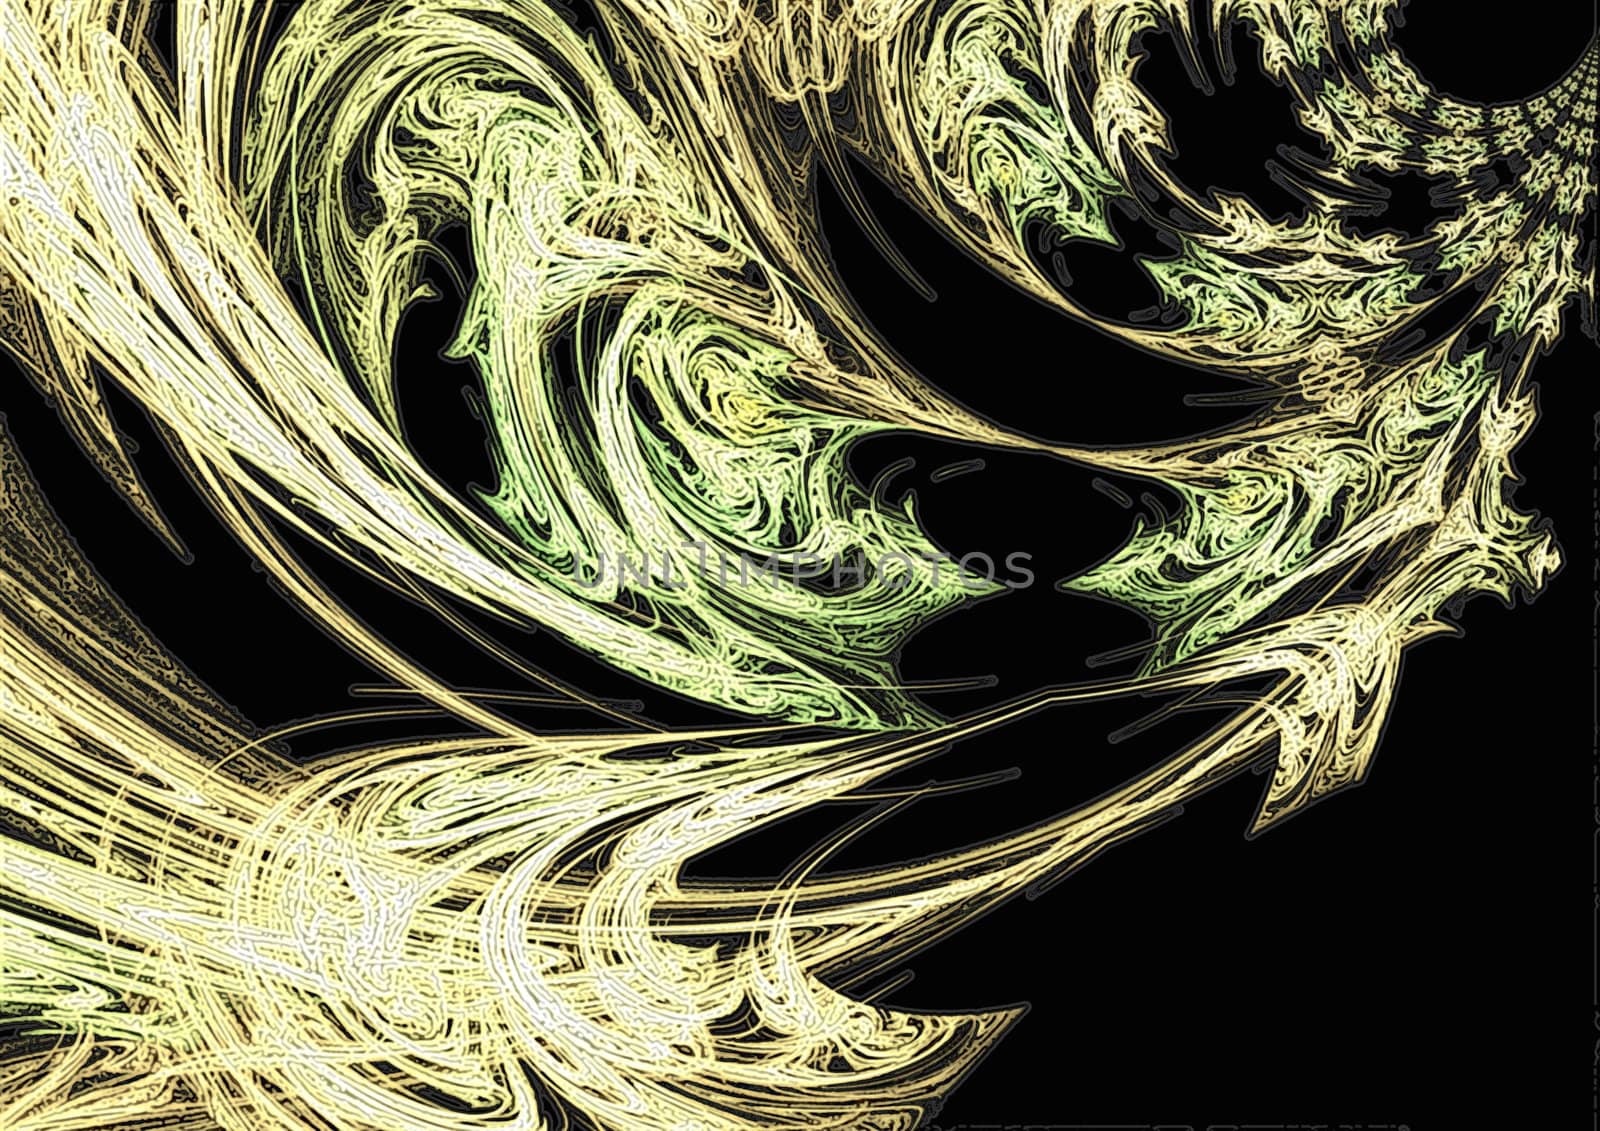 Cosmic Whirls by creativ000